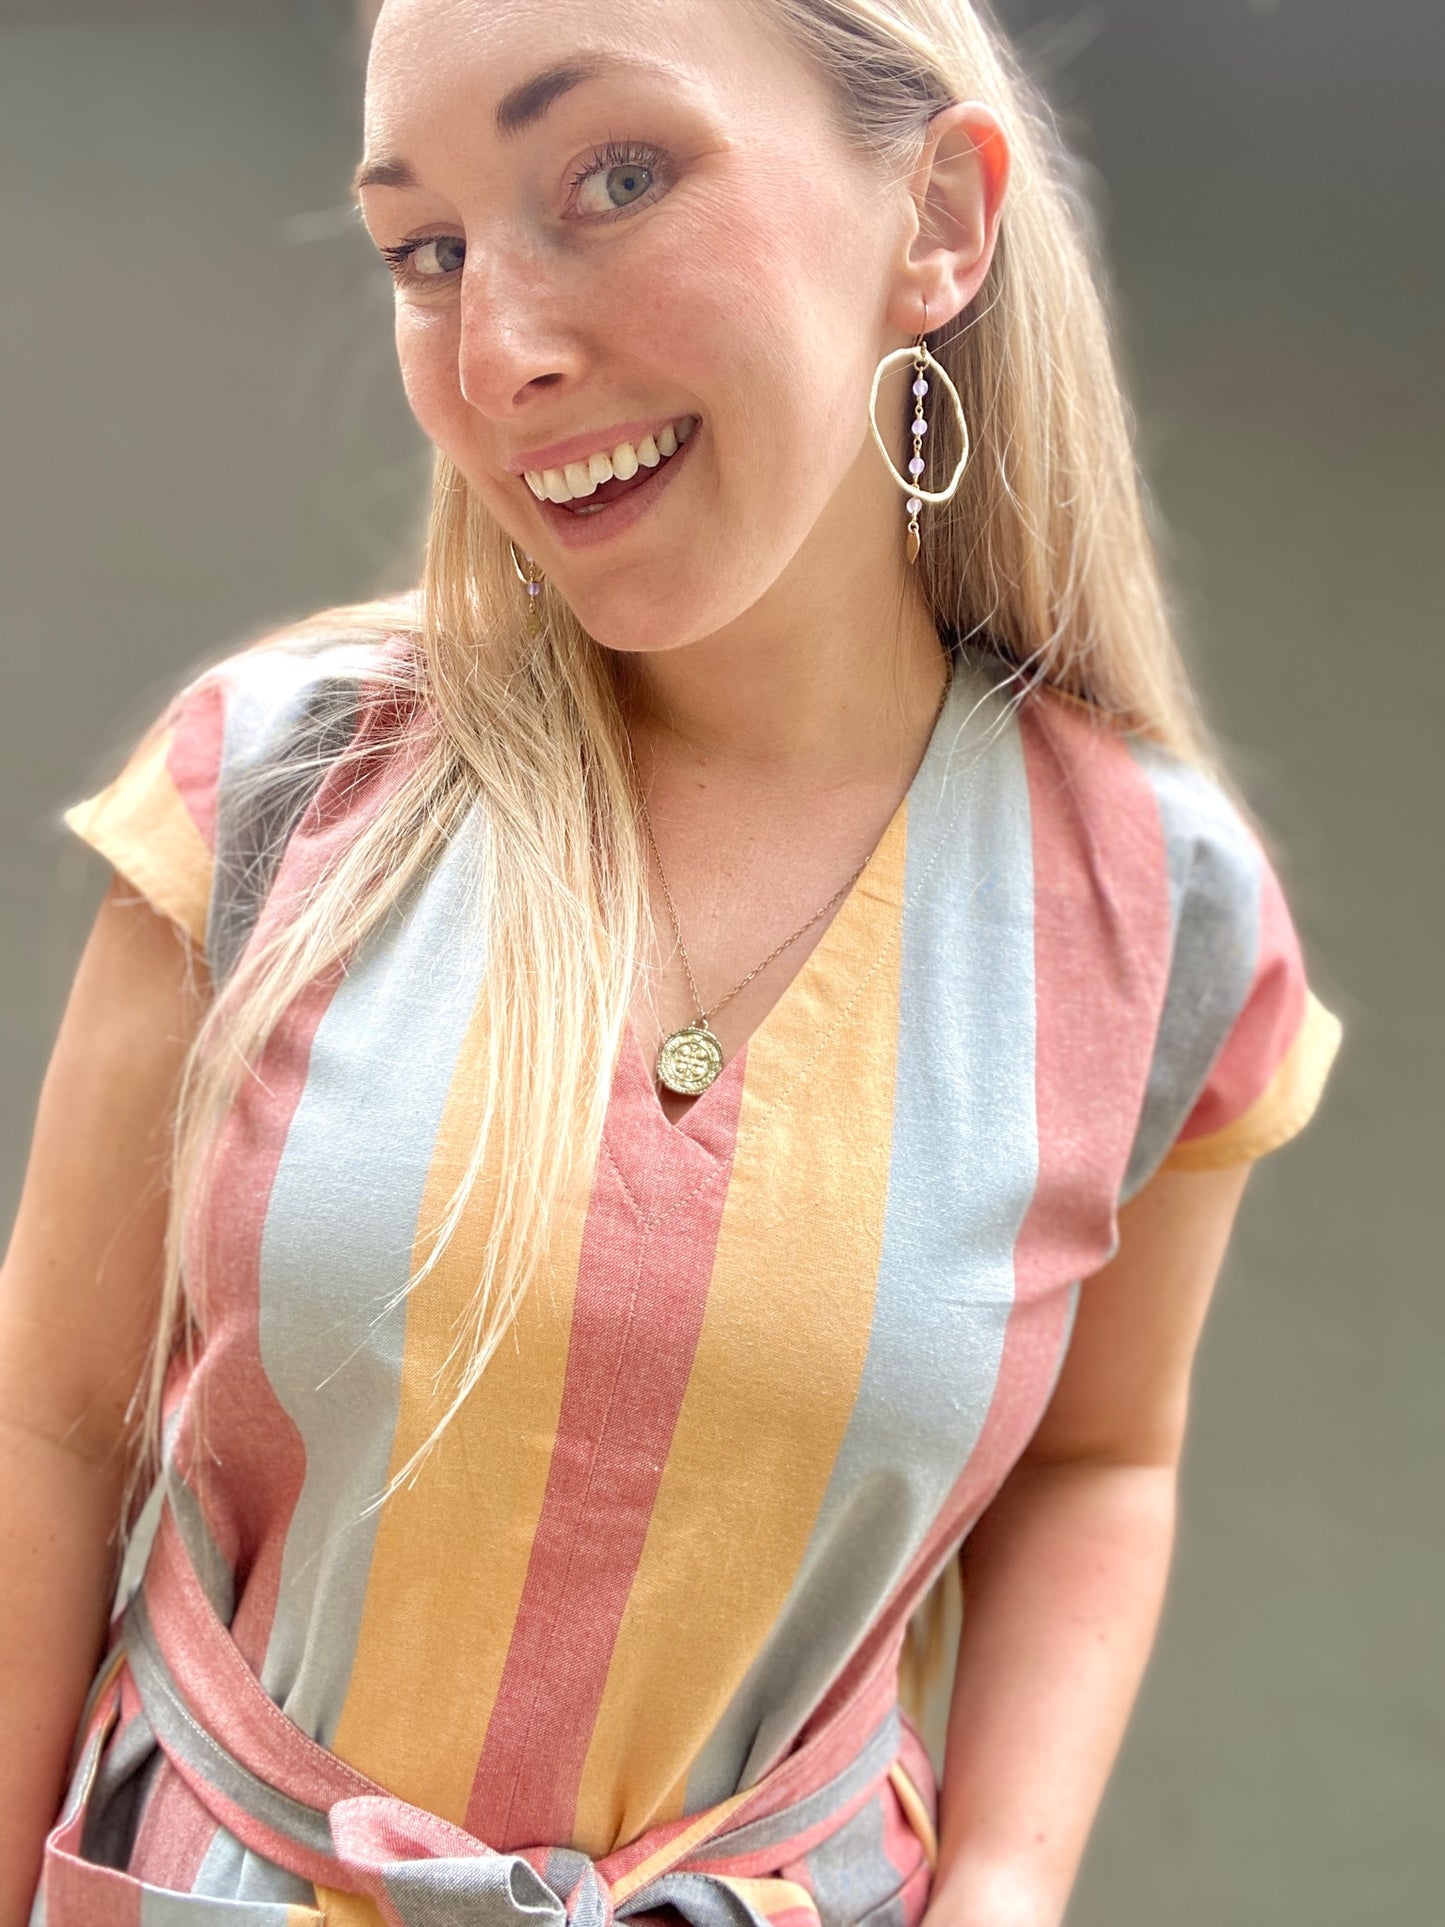 Woven Tunic Style Pocket Dress in Pastel Stripe